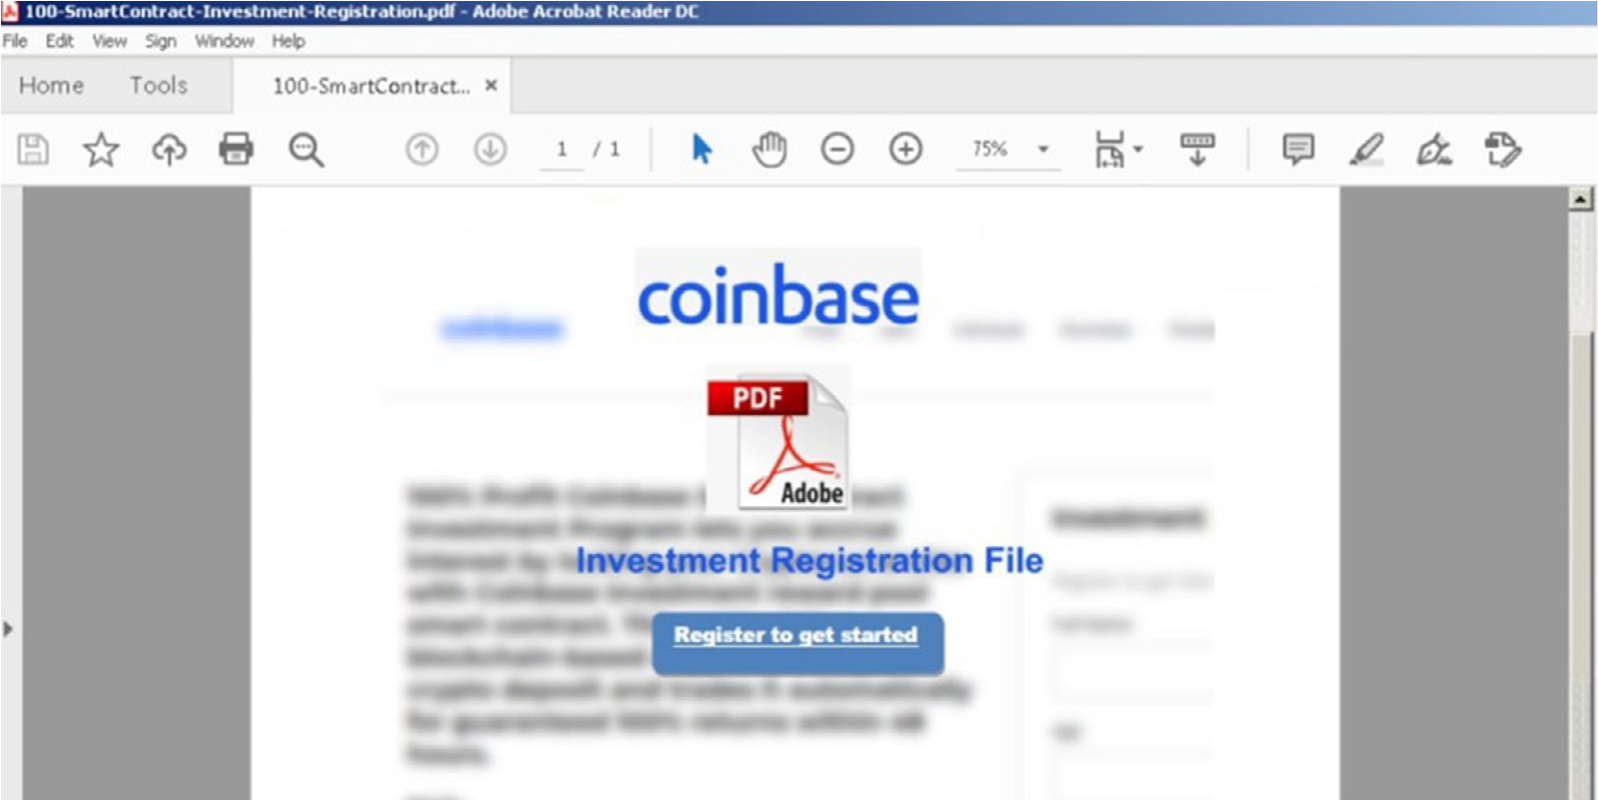 coinbase PDF